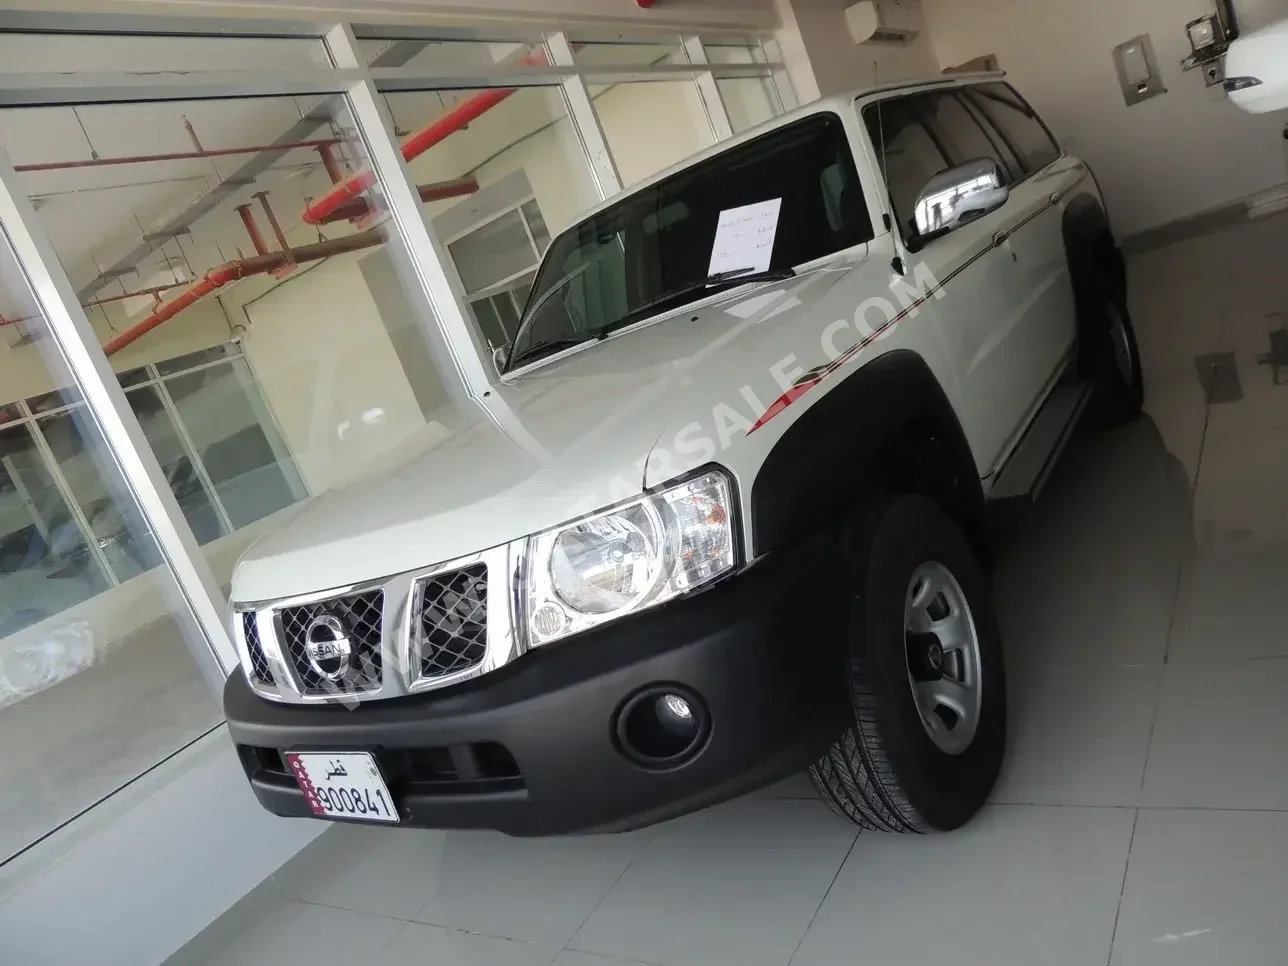 Nissan  Patrol  Safari  2022  Automatic  16,000 Km  6 Cylinder  Four Wheel Drive (4WD)  SUV  White  With Warranty